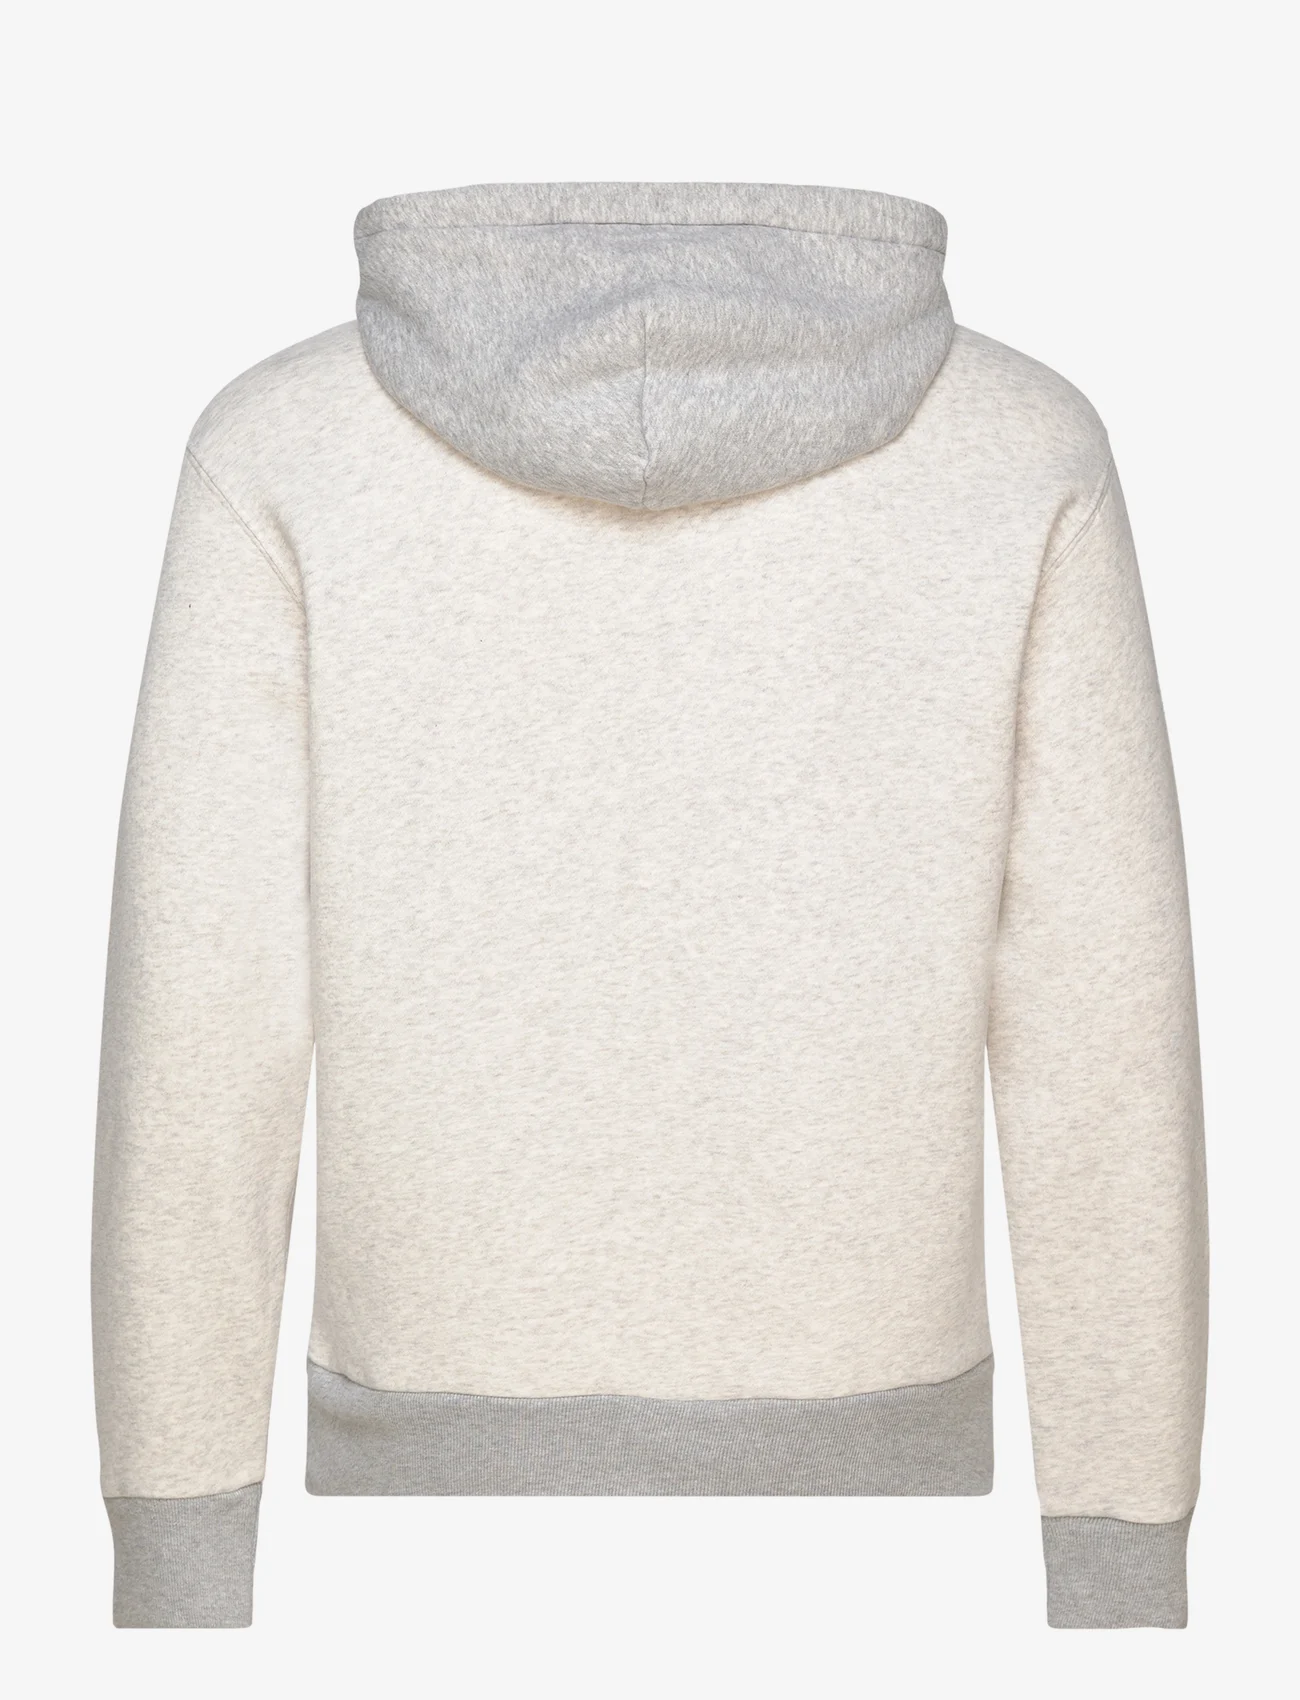 Hollister - HCo. GUYS SWEATSHIRTS - hoodies - heather grey - 1